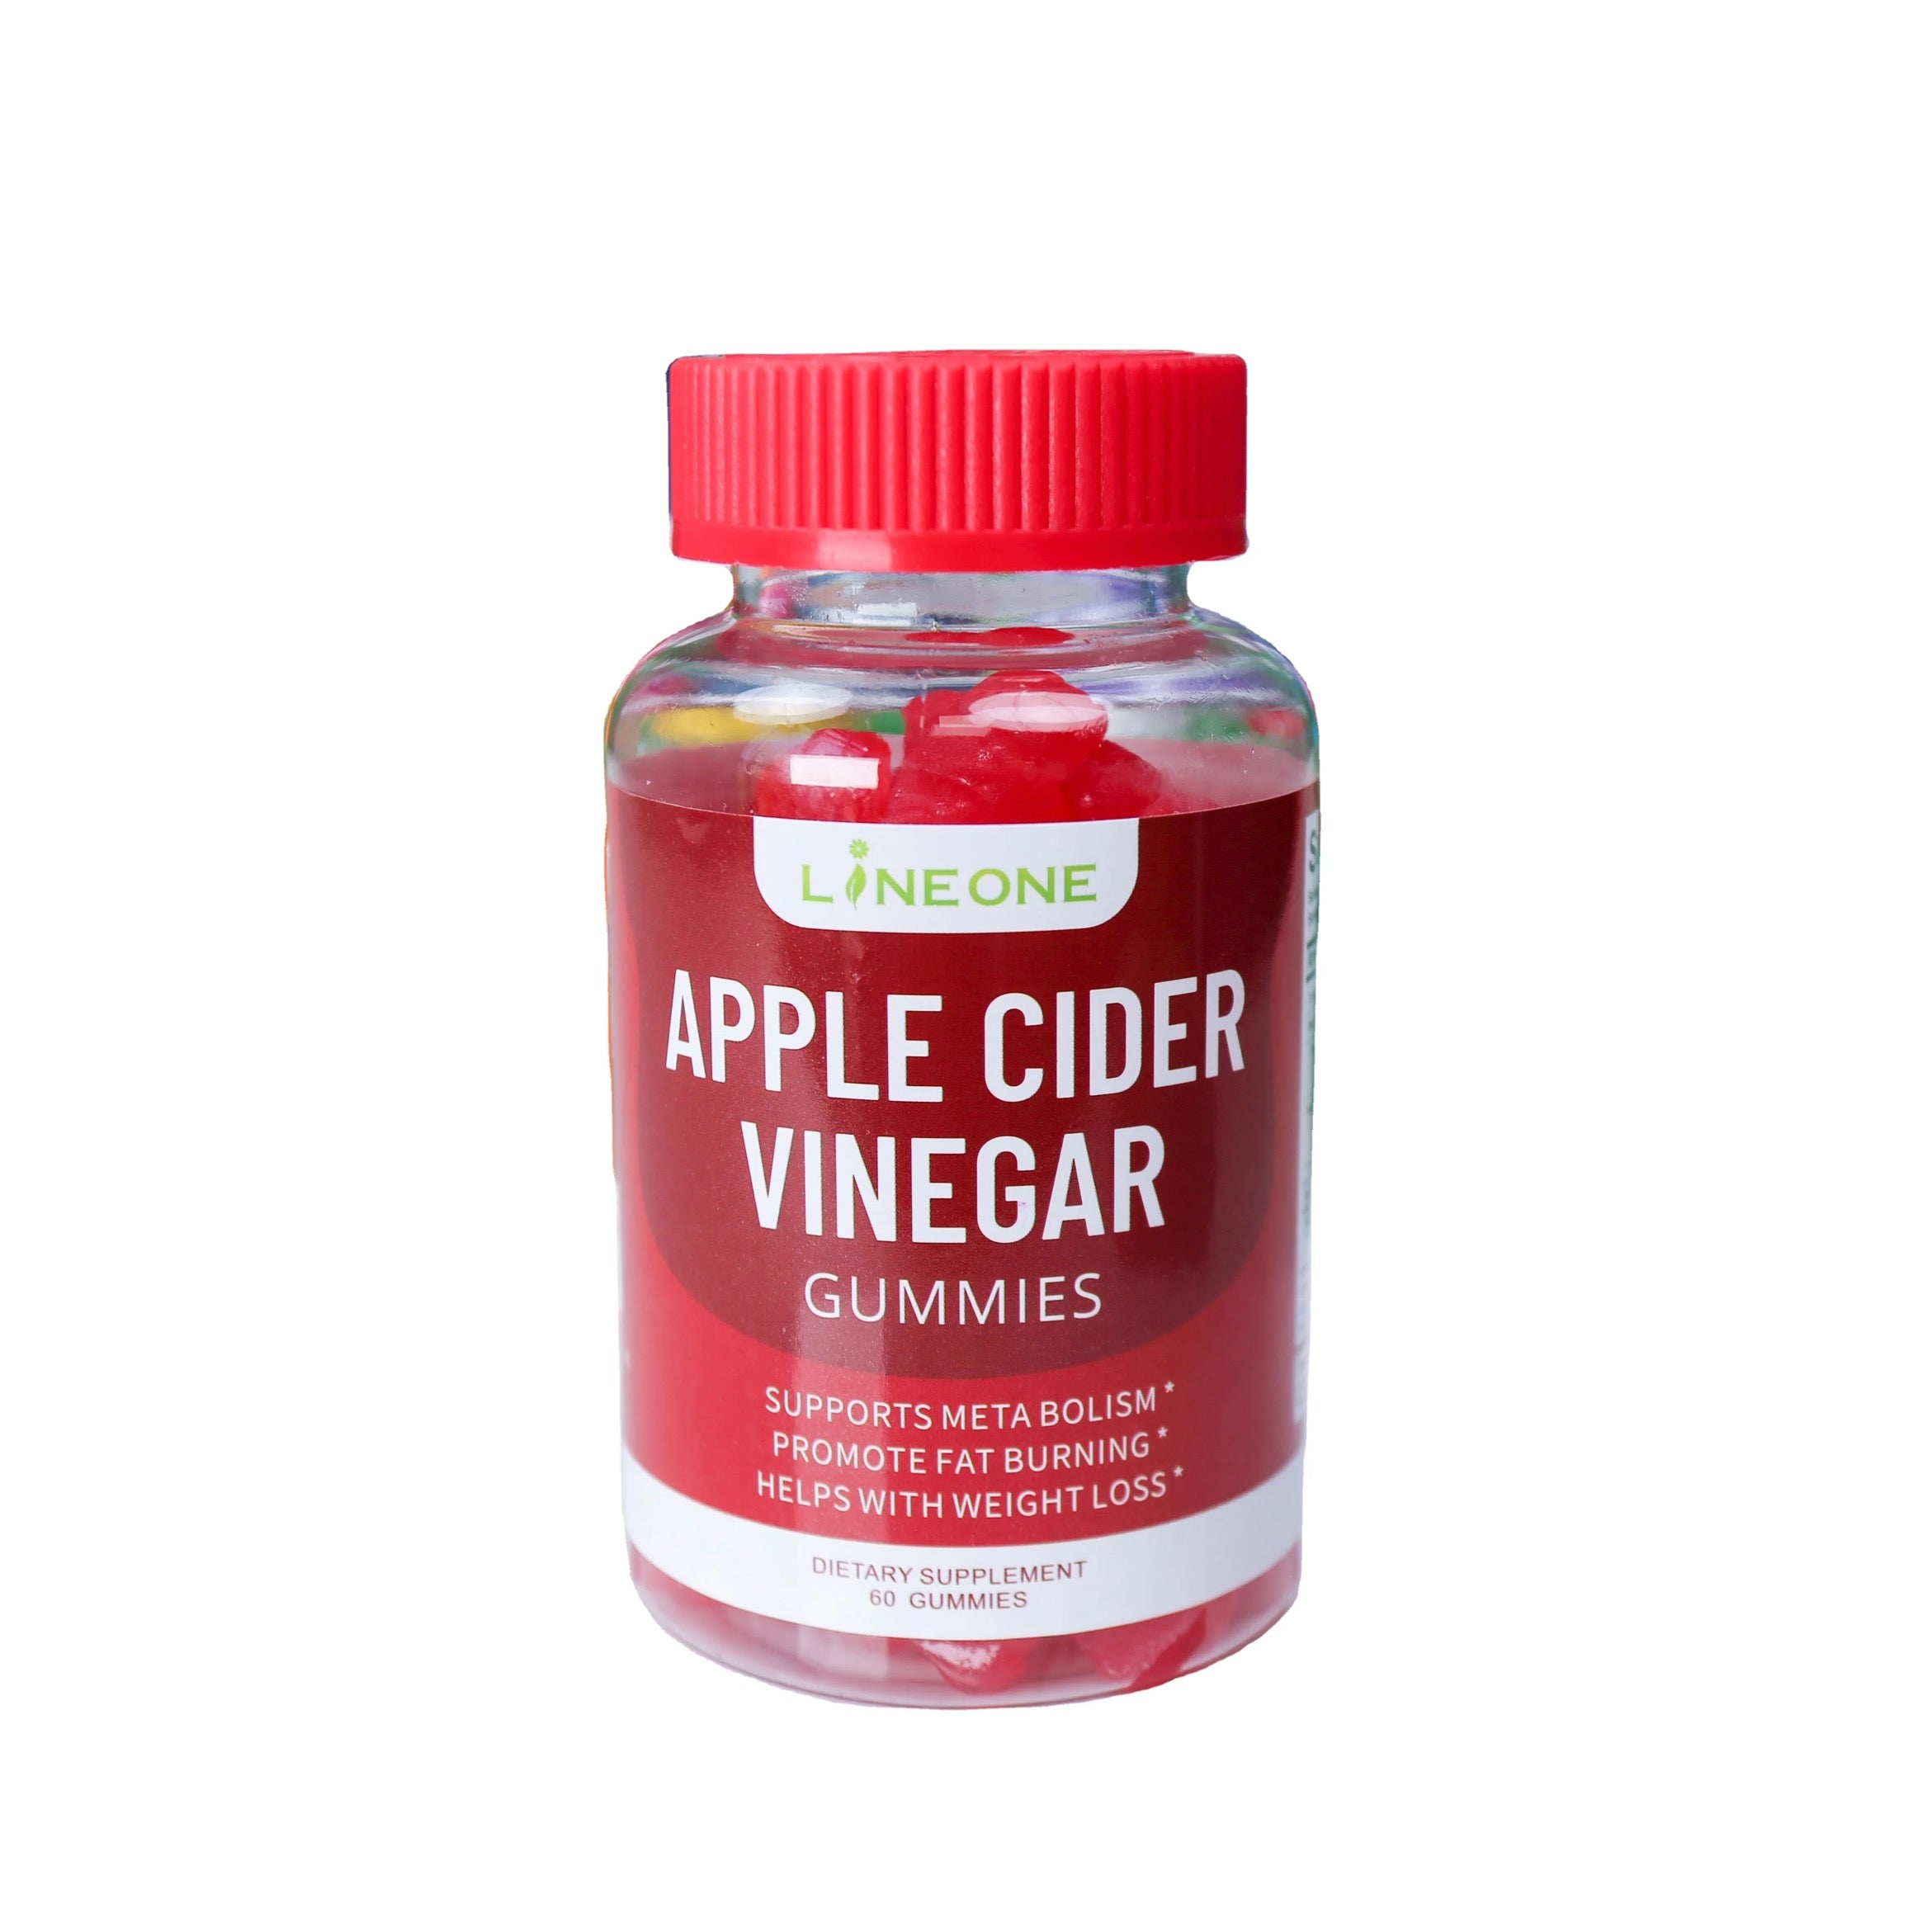 Apple Cider Vinegar Gummies with Folic Acid and Vitamin B12